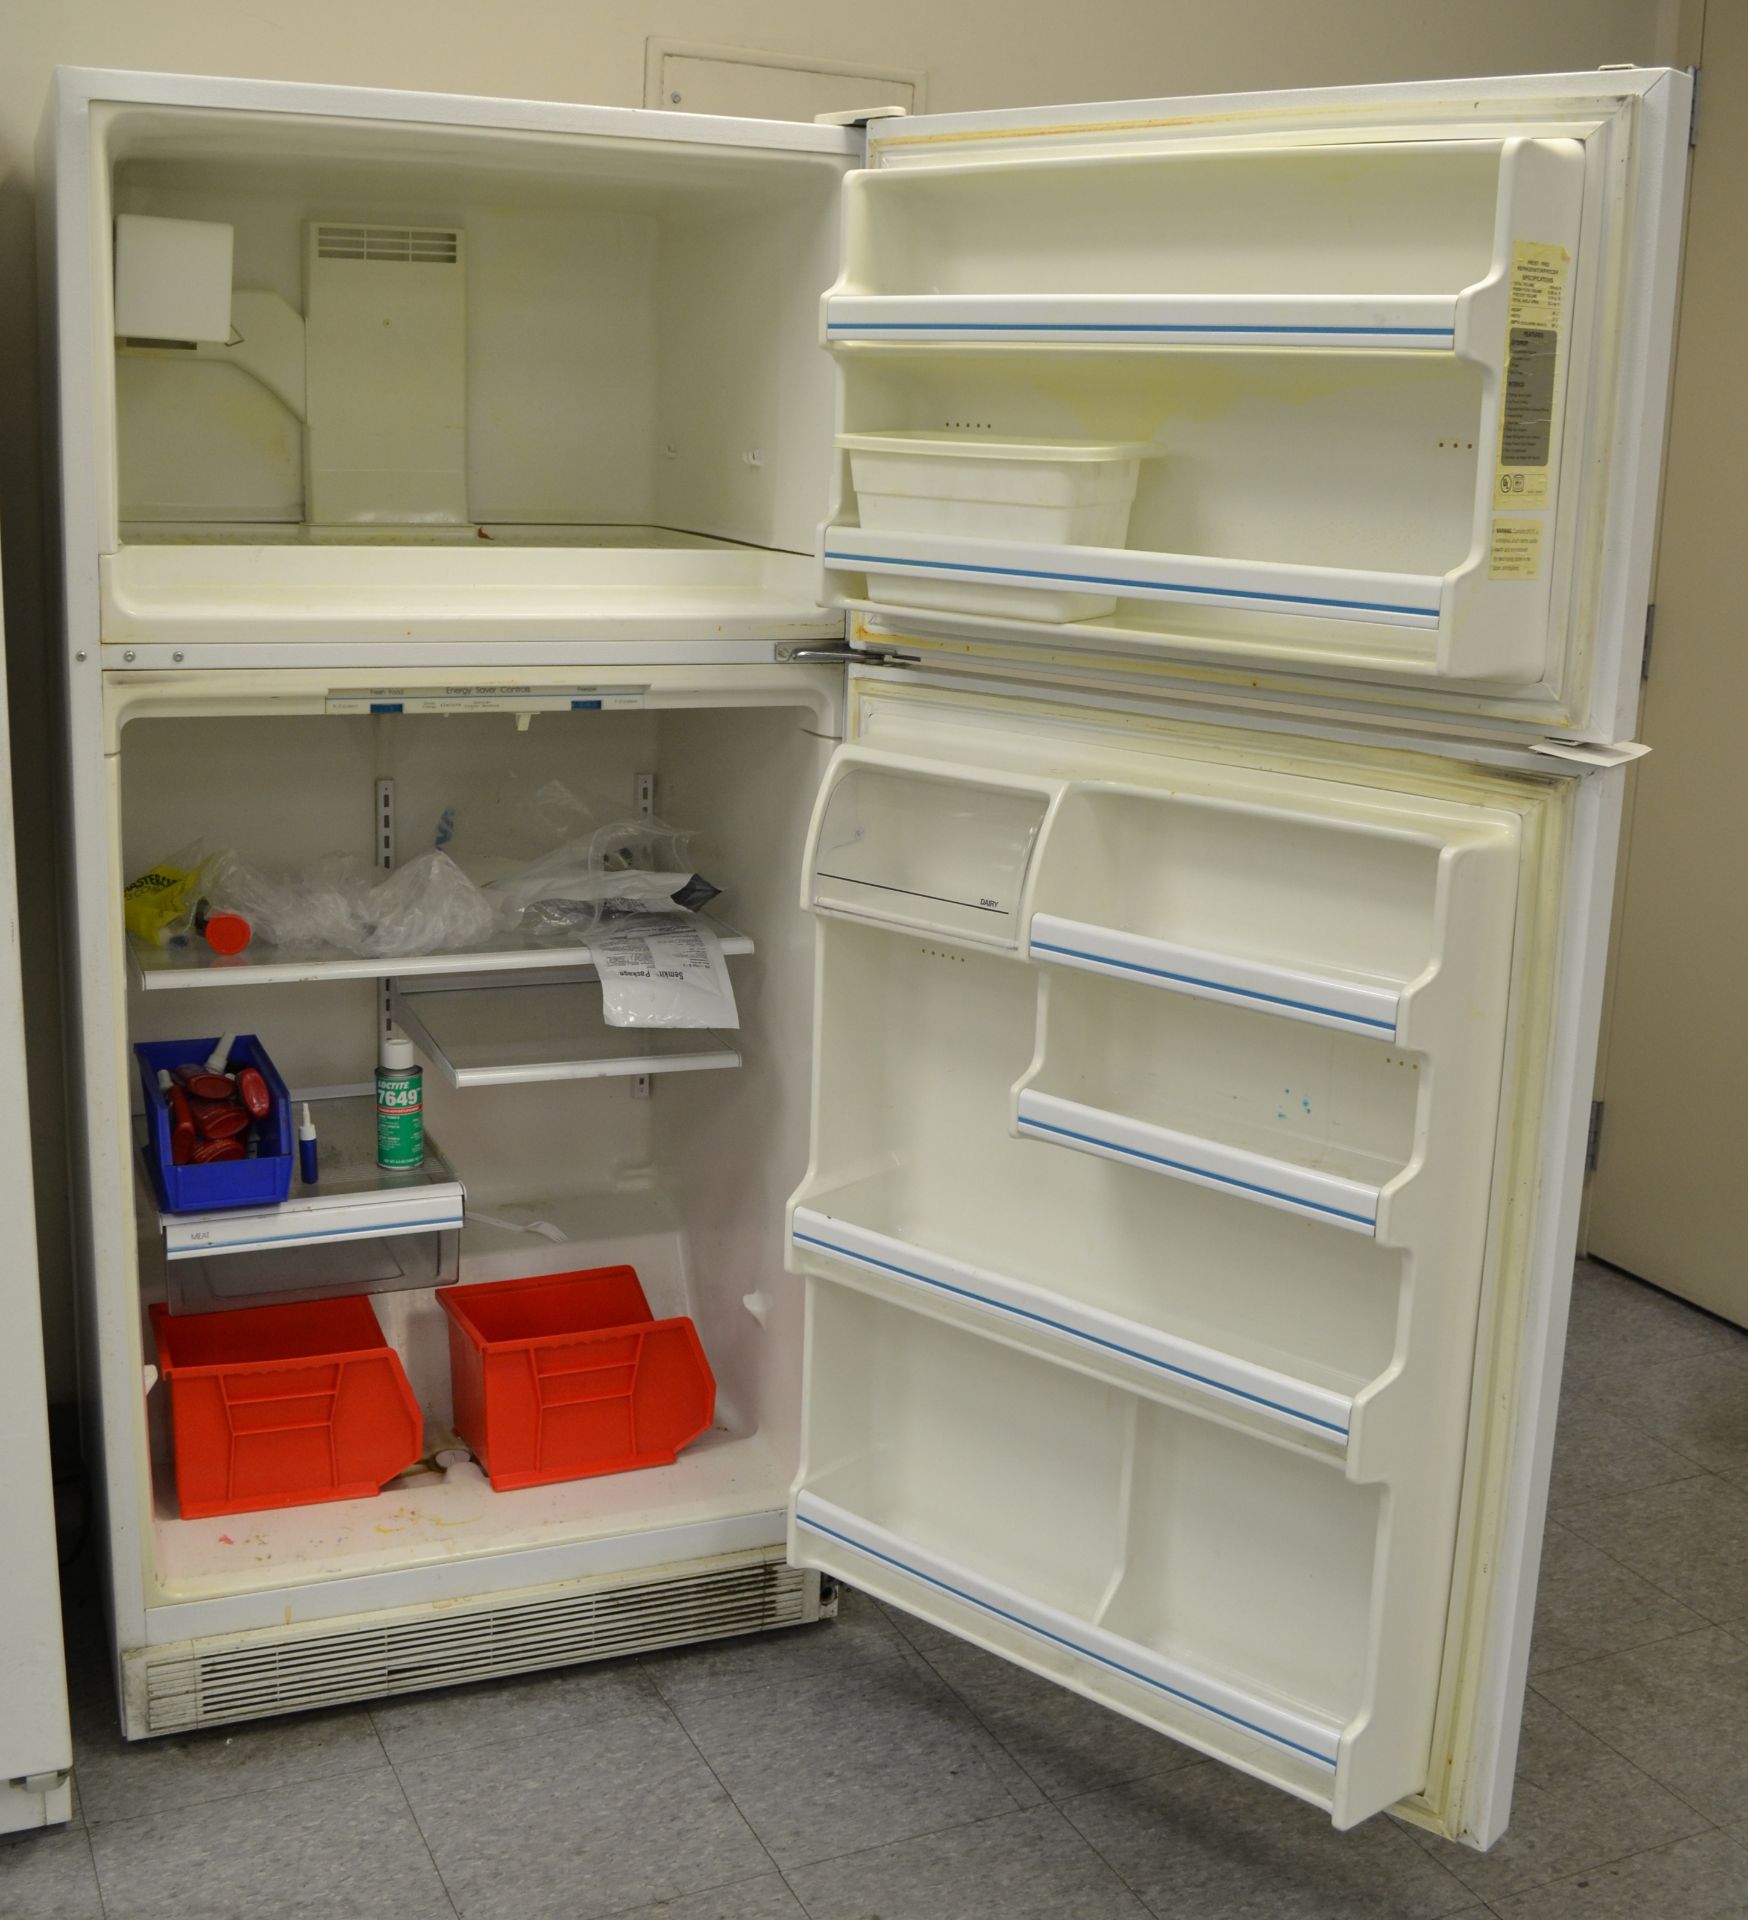 Magic Chef Chemical Storage Refrigerator Freezer - Image 2 of 3